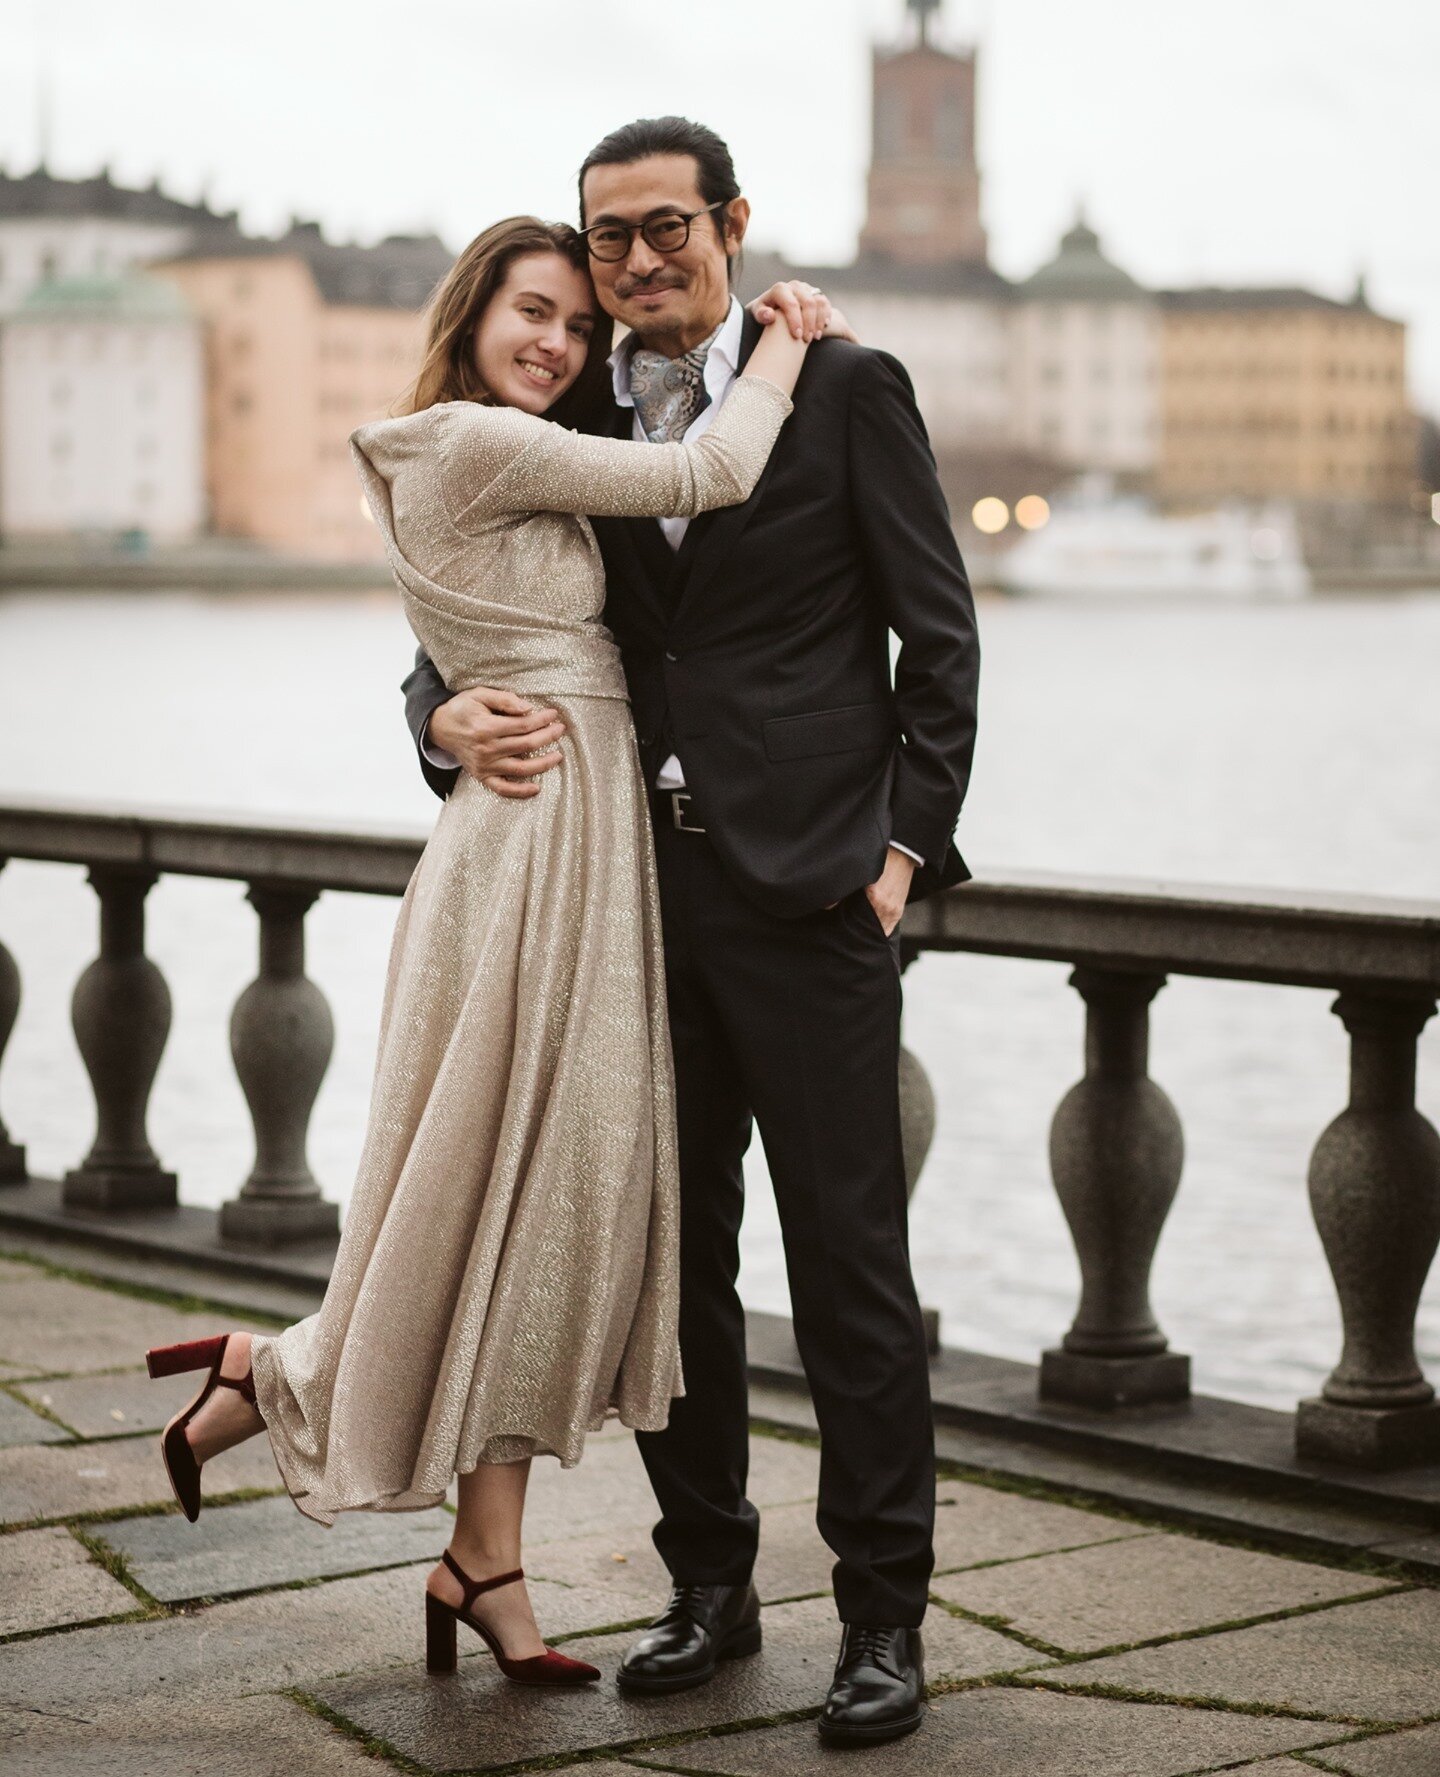 Throwback to this September intimate and lovely wedding in the Stockholm City Hall (stadshuset).⁠
⁠
❃⁠
❃⁠
❃⁠
#Swedishwedding #destinationwedding #weddinginspiration #weddingphotography #weddingday #Br&ouml;llop2021 #Br&ouml;llop2020 #Br&ouml;llopsfot